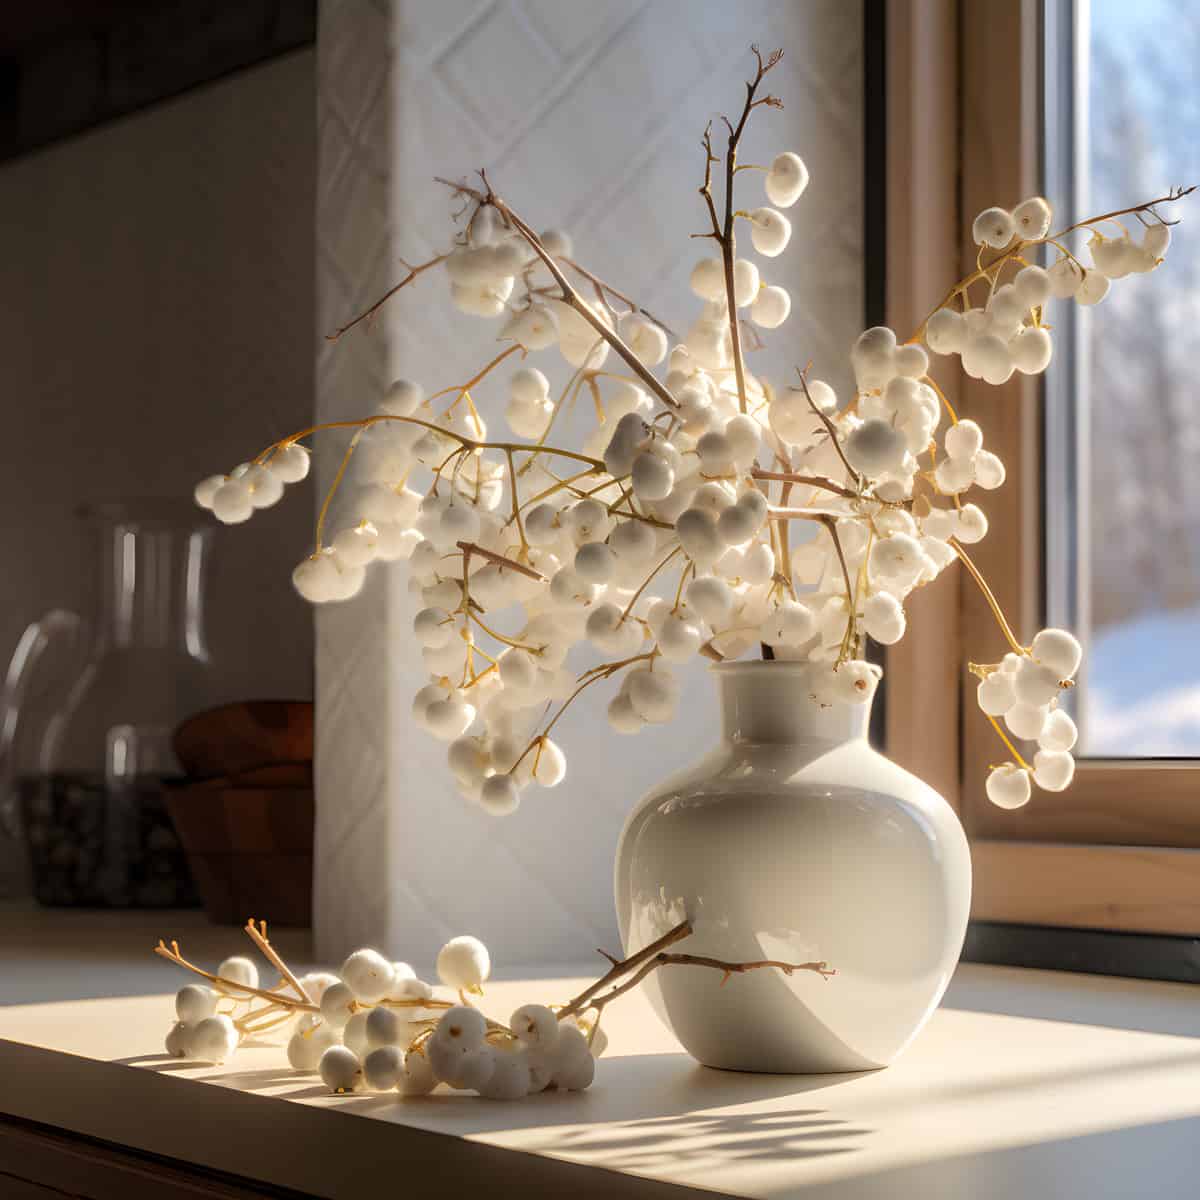 White Aspen Berry on a kitchen counter